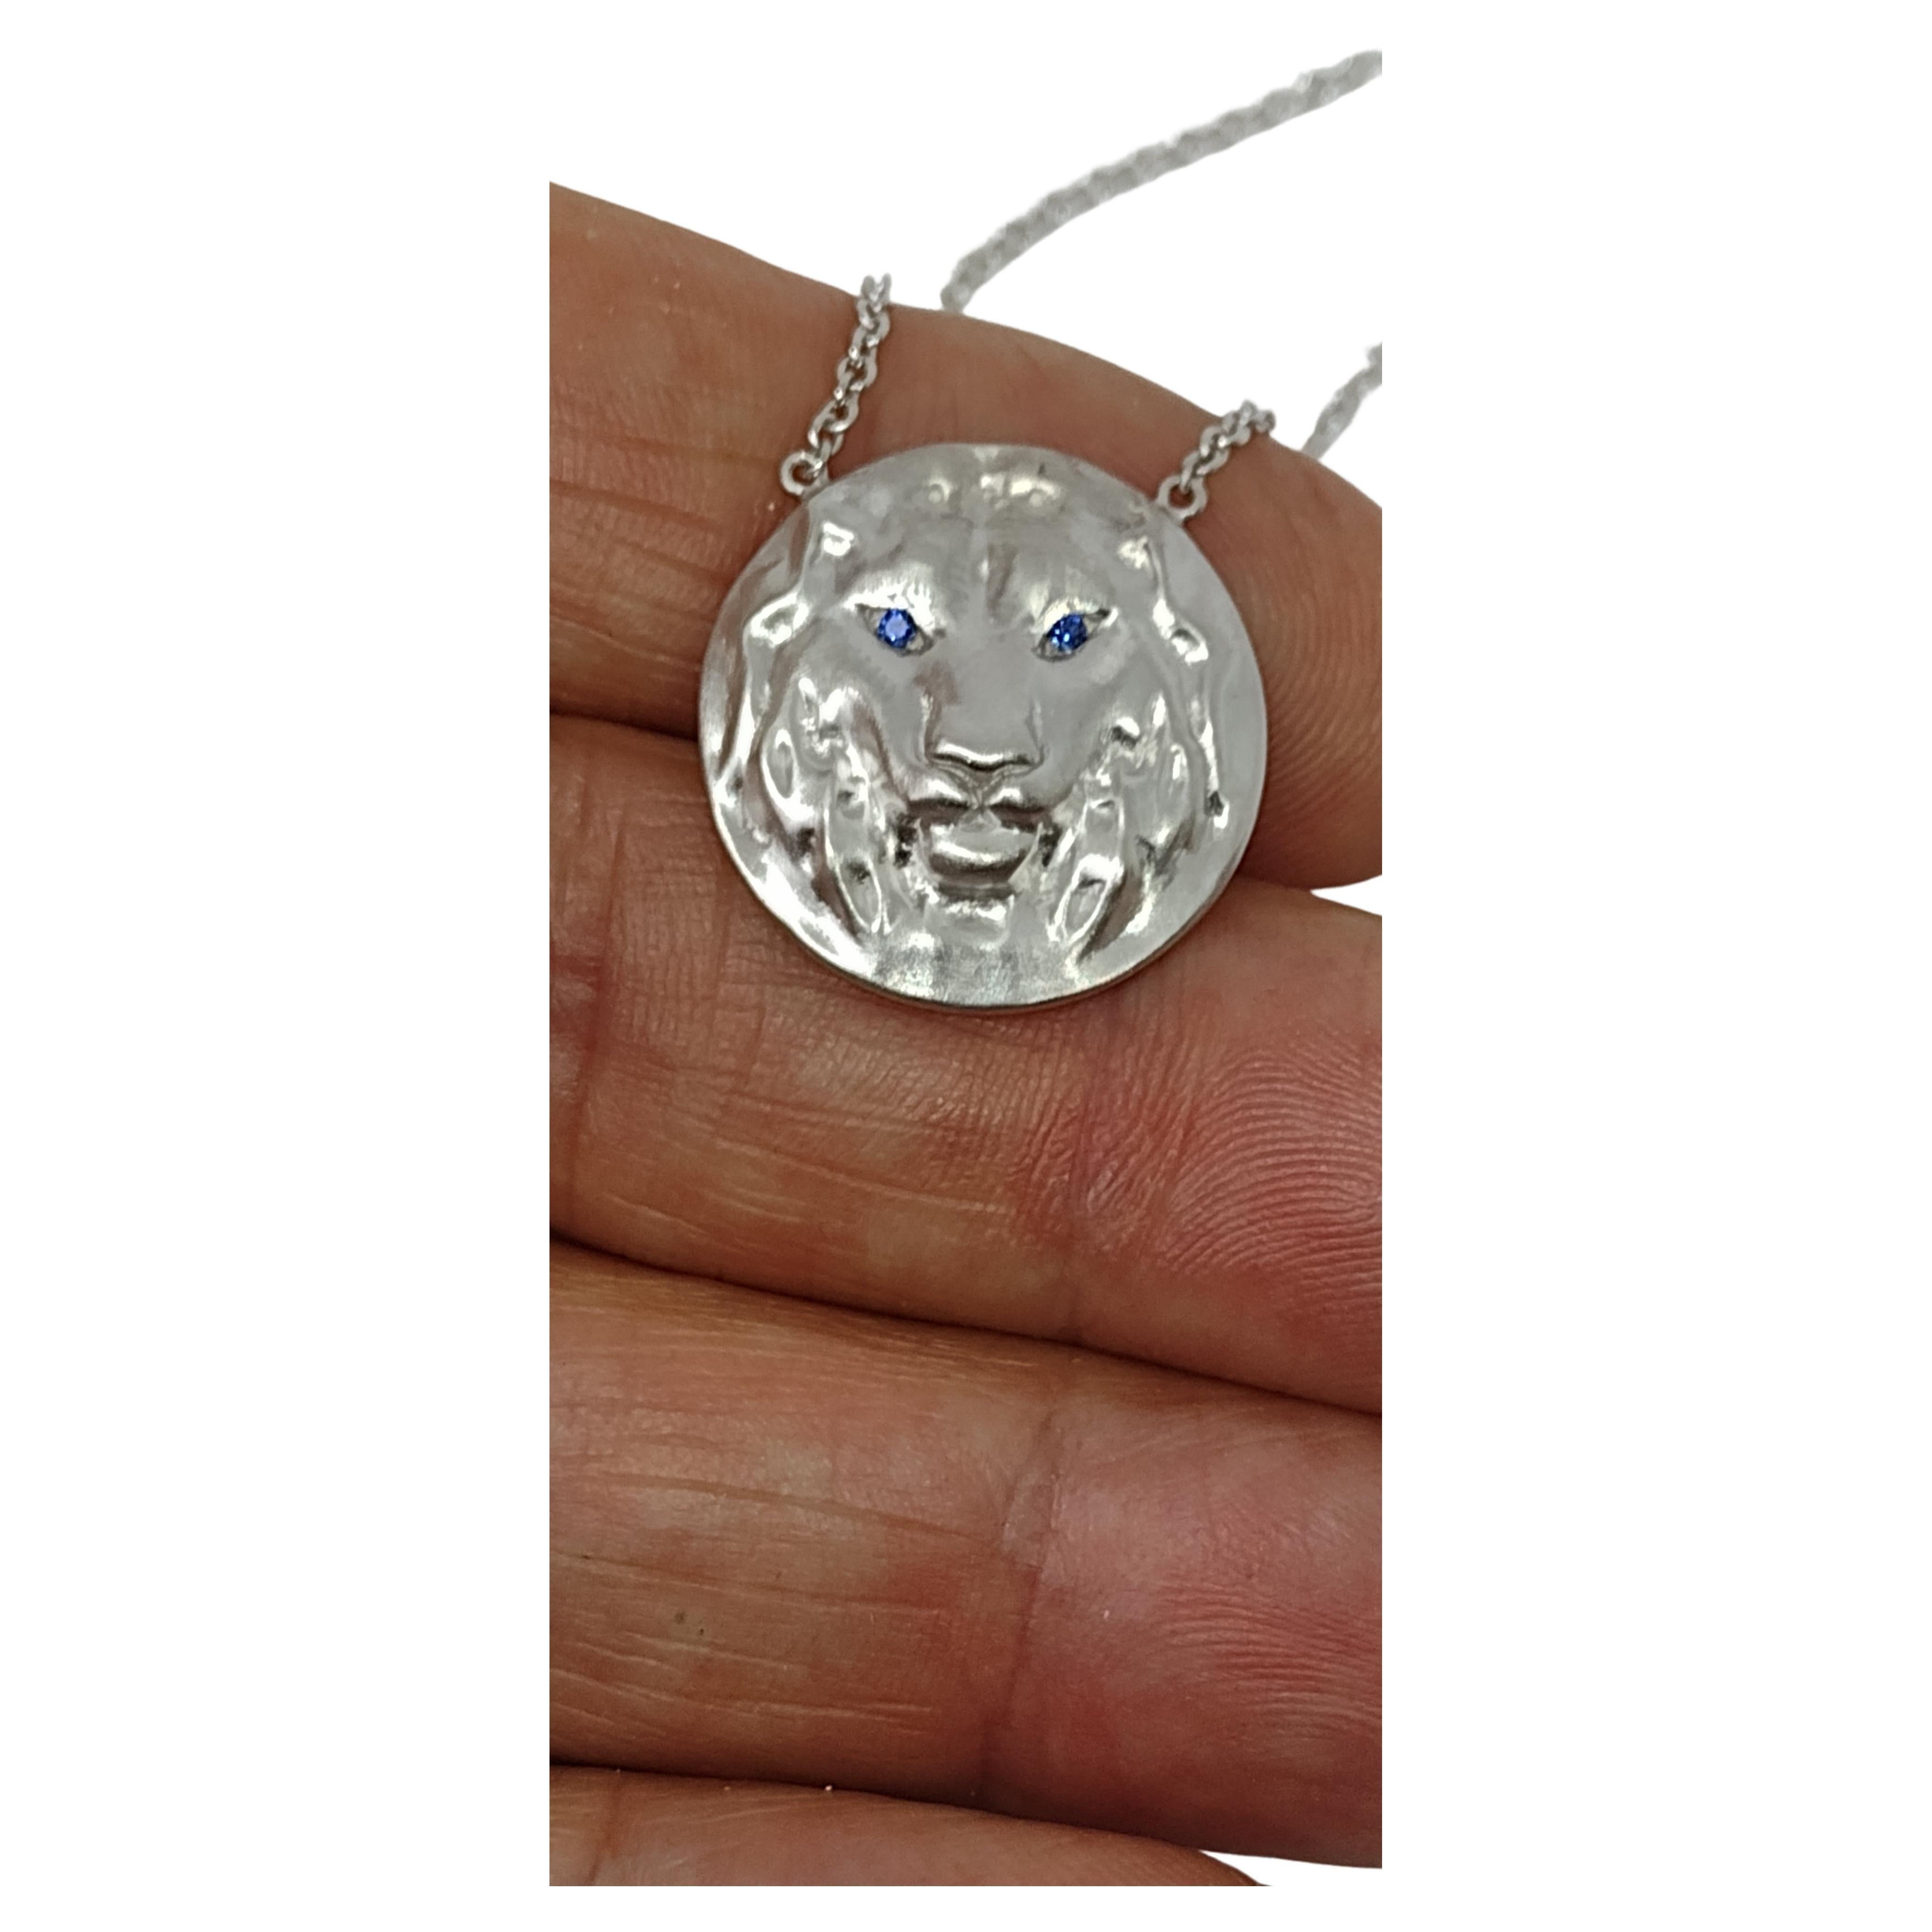 14 Karat White Gold Pendant Necklace Lion with Sapphire Eyes